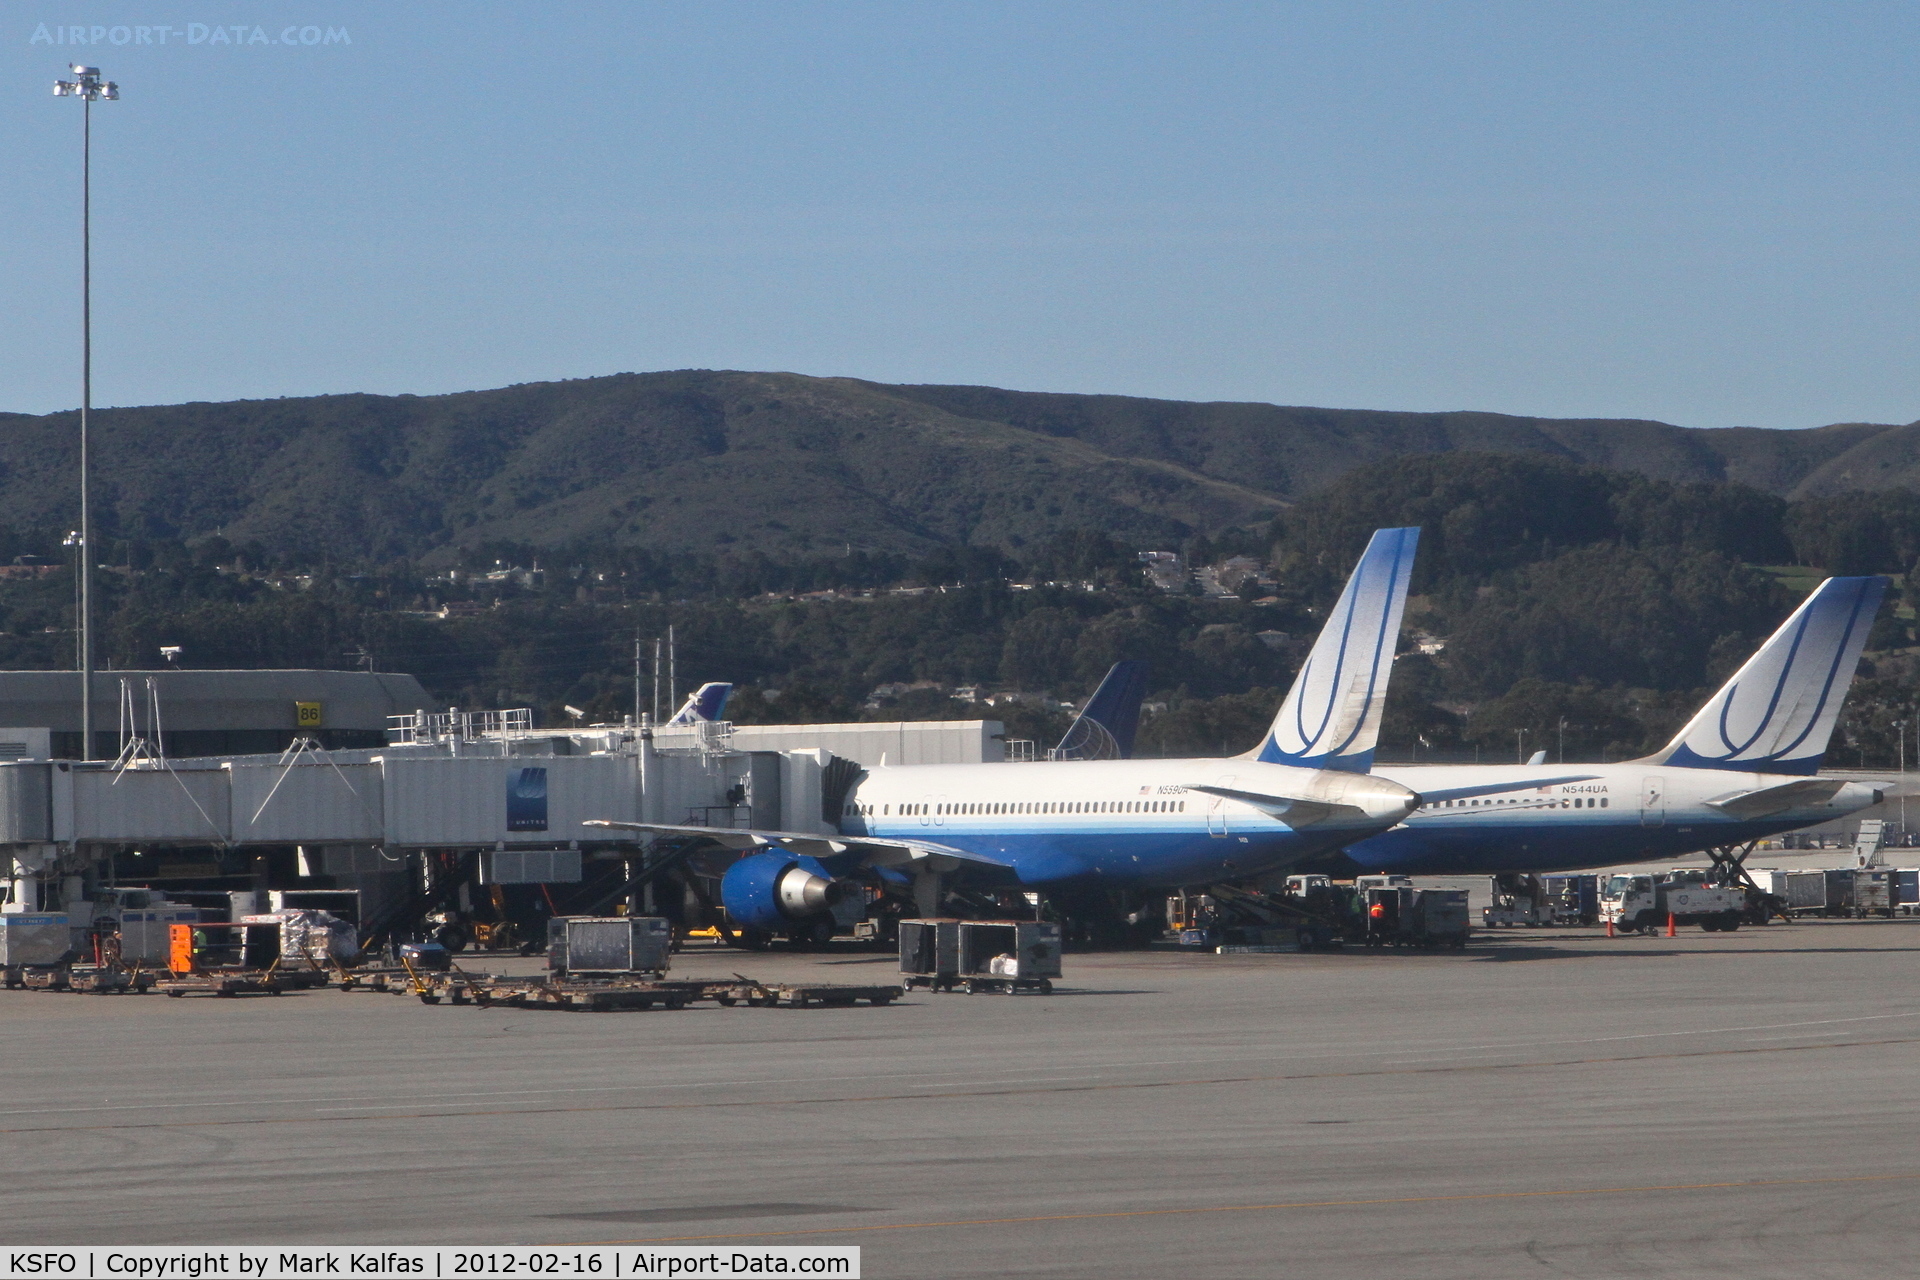 San Francisco International Airport (SFO) - San Francisco International Airport/KSFO United Airlines gates 84 and 86.